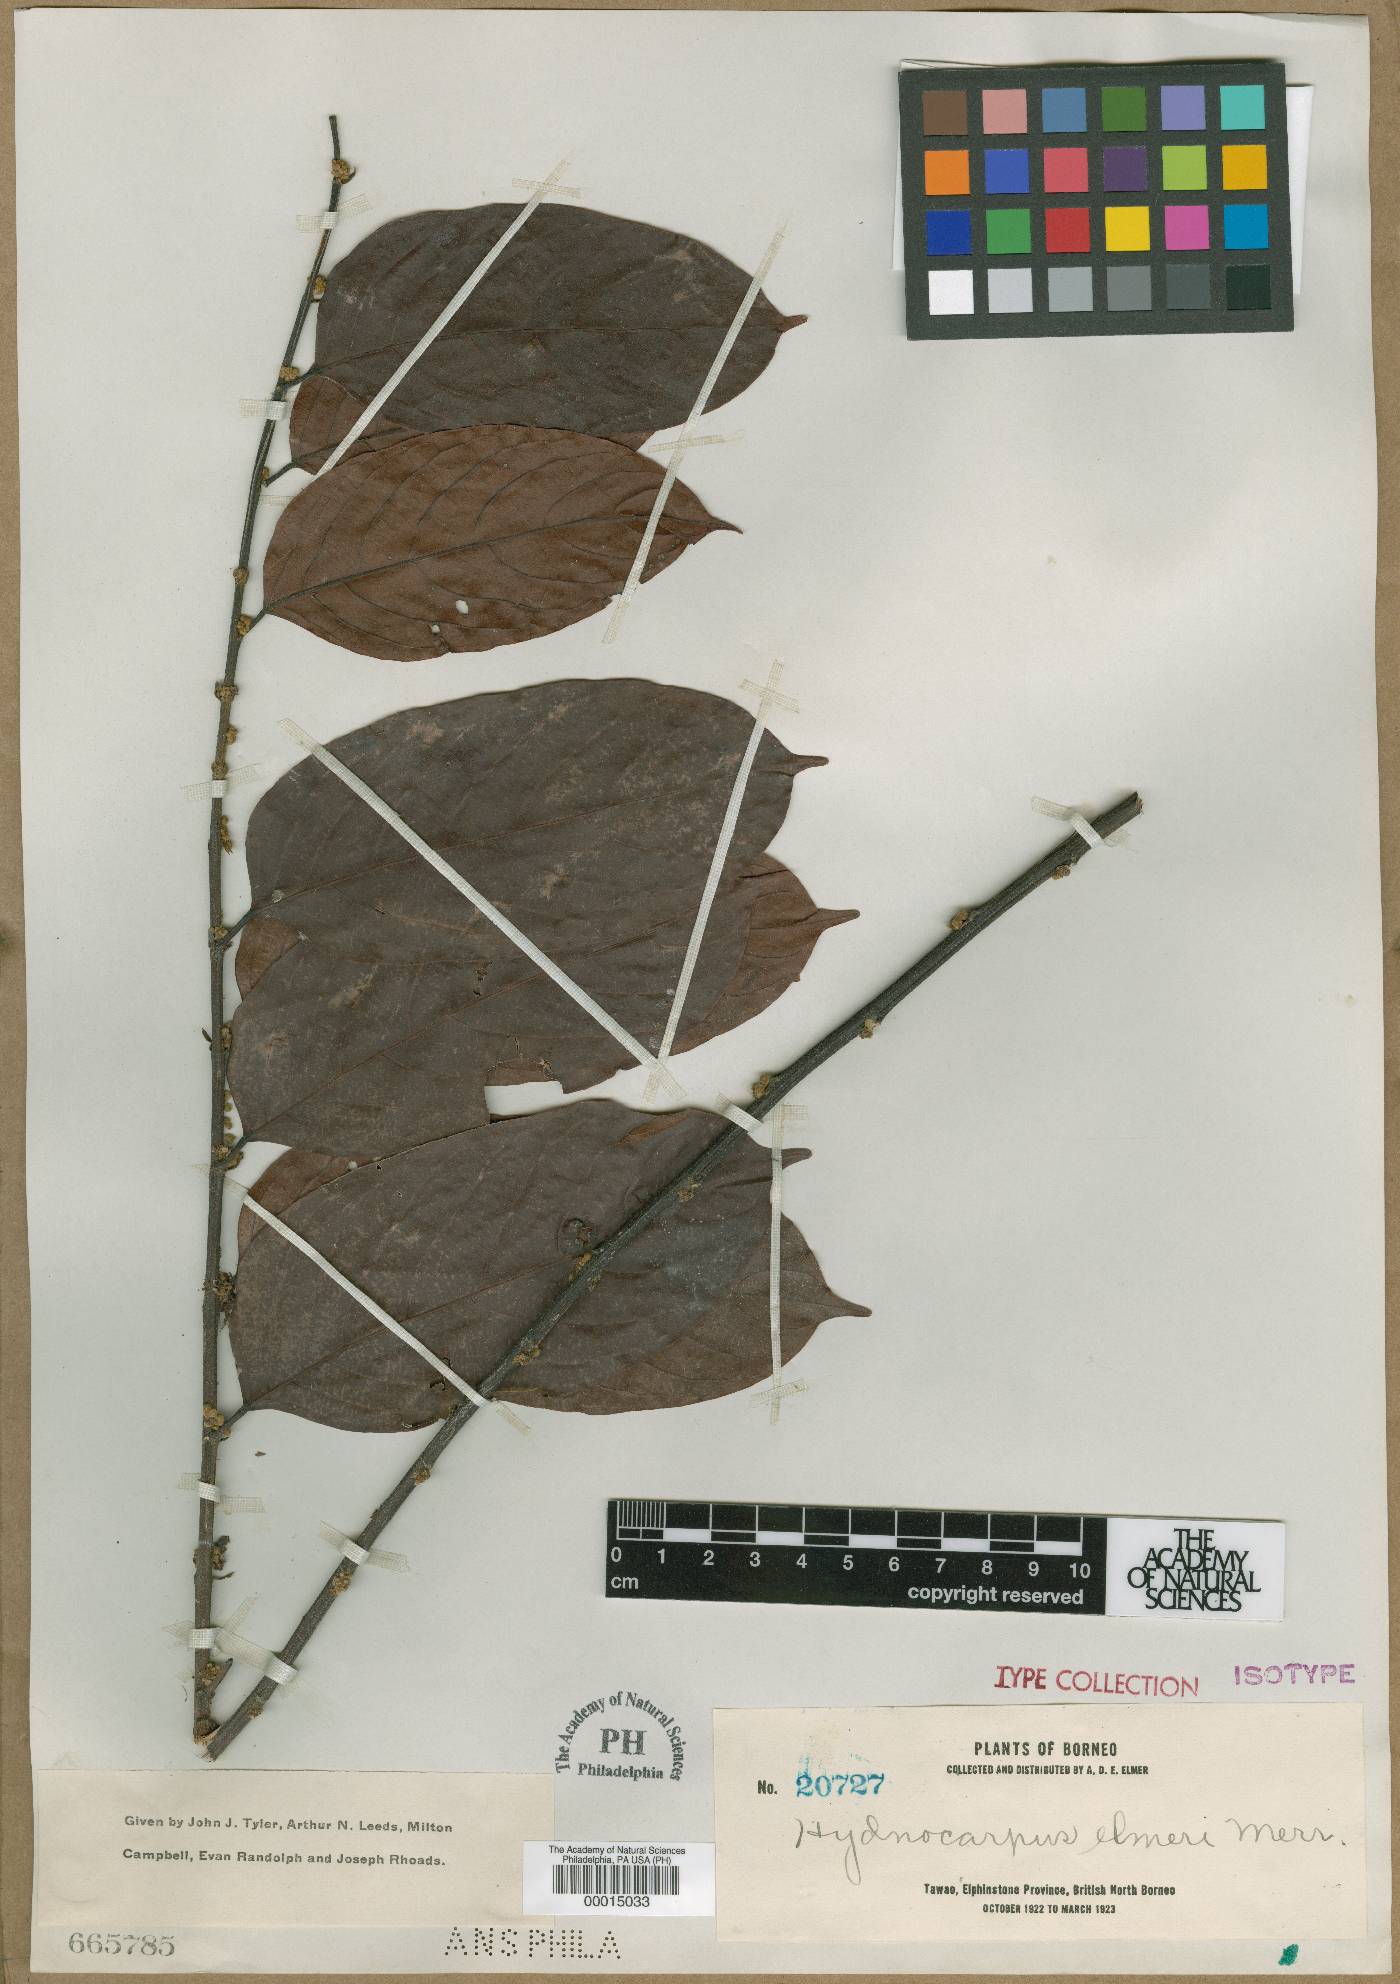 Hydnocarpus image